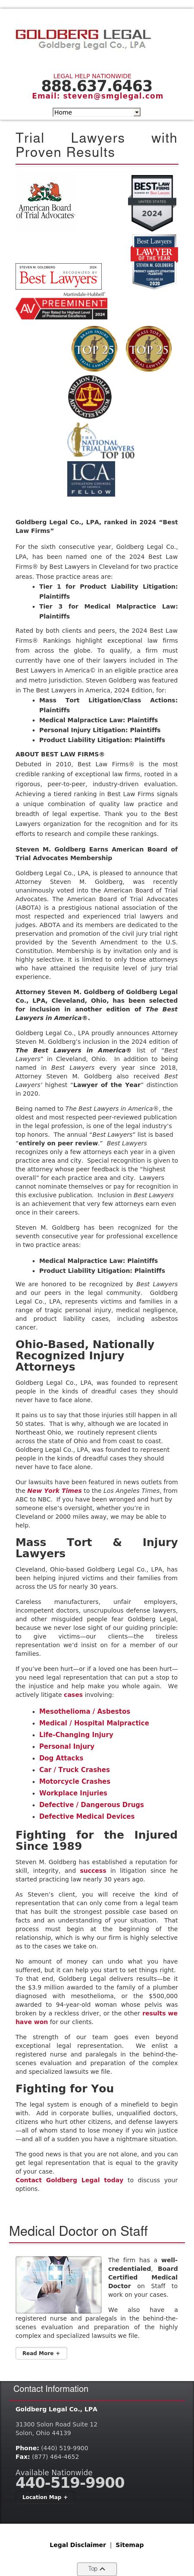 Steven M. Goldberg Co., L.P.A. - Cleveland OH Lawyers